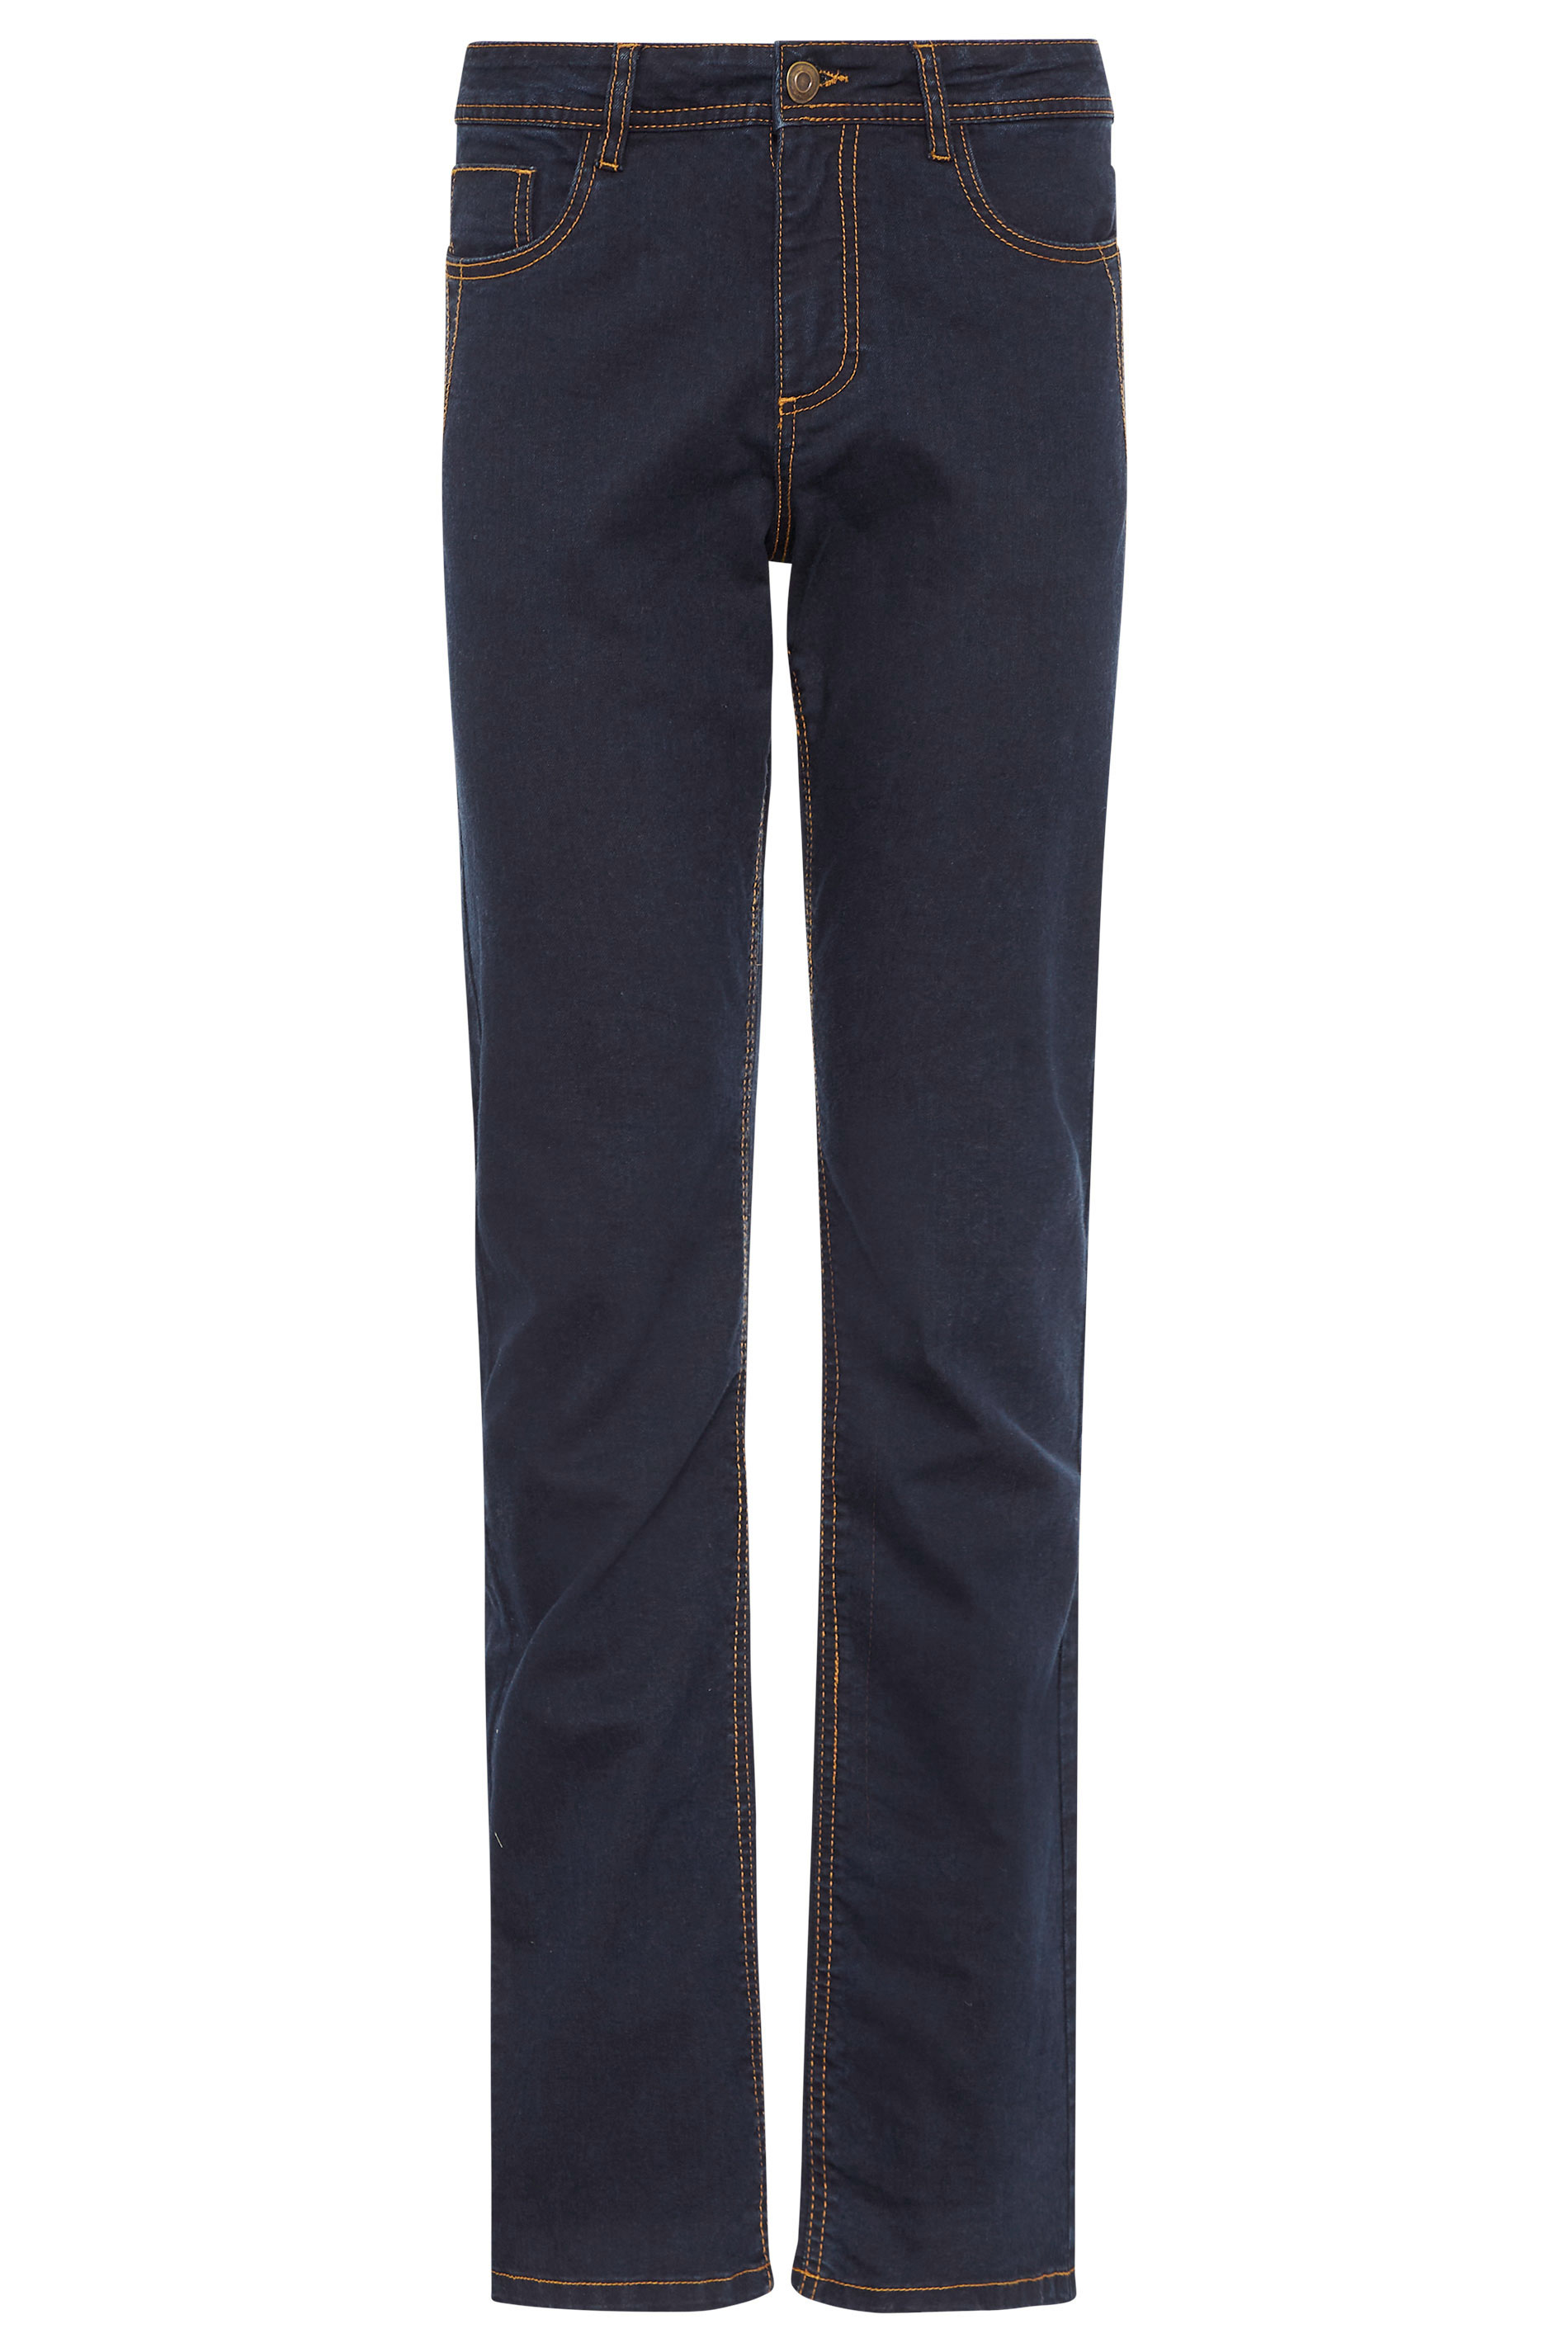 LTS MADE FOR GOOD Indigo Blue Straight Leg Denim Jeans | Long Tall Sally 3